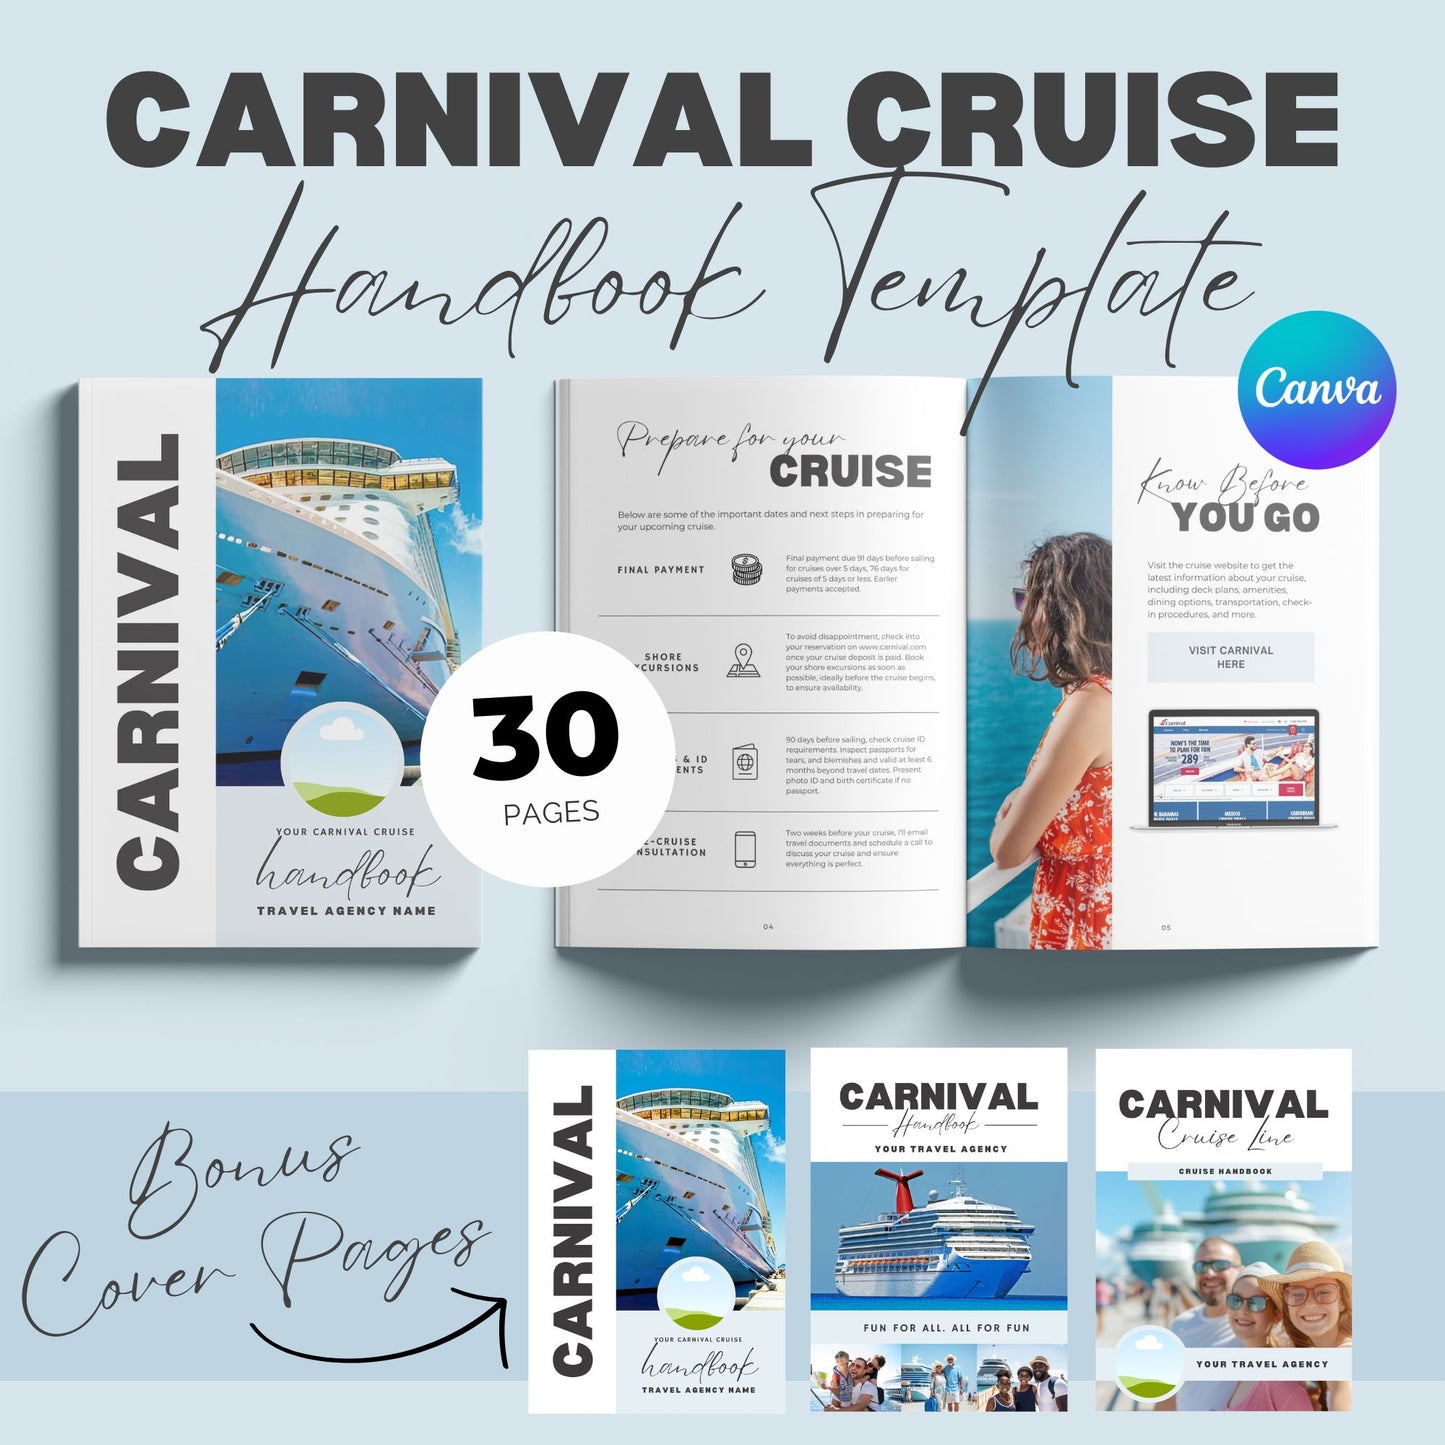 Carnival Cruise Handbook Canva Template